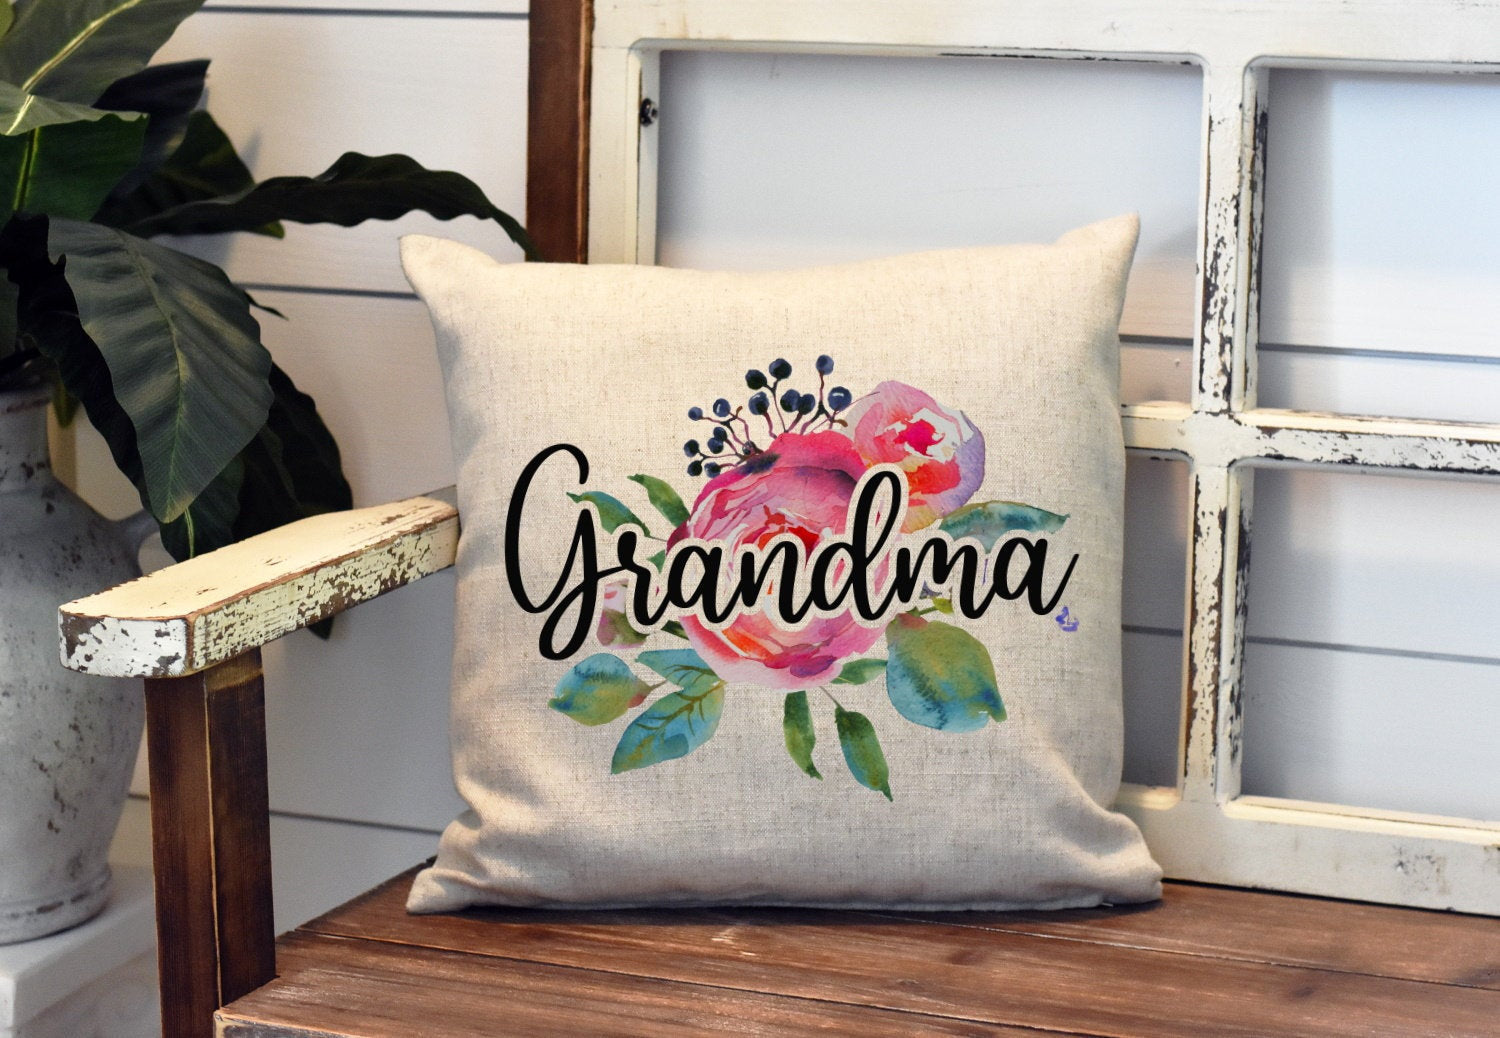 Grandma Floral Watercolor Pillow Cover - Grandma Pillow - Grandmother Decorations Farmhouse Decor Throw Pillow Cover